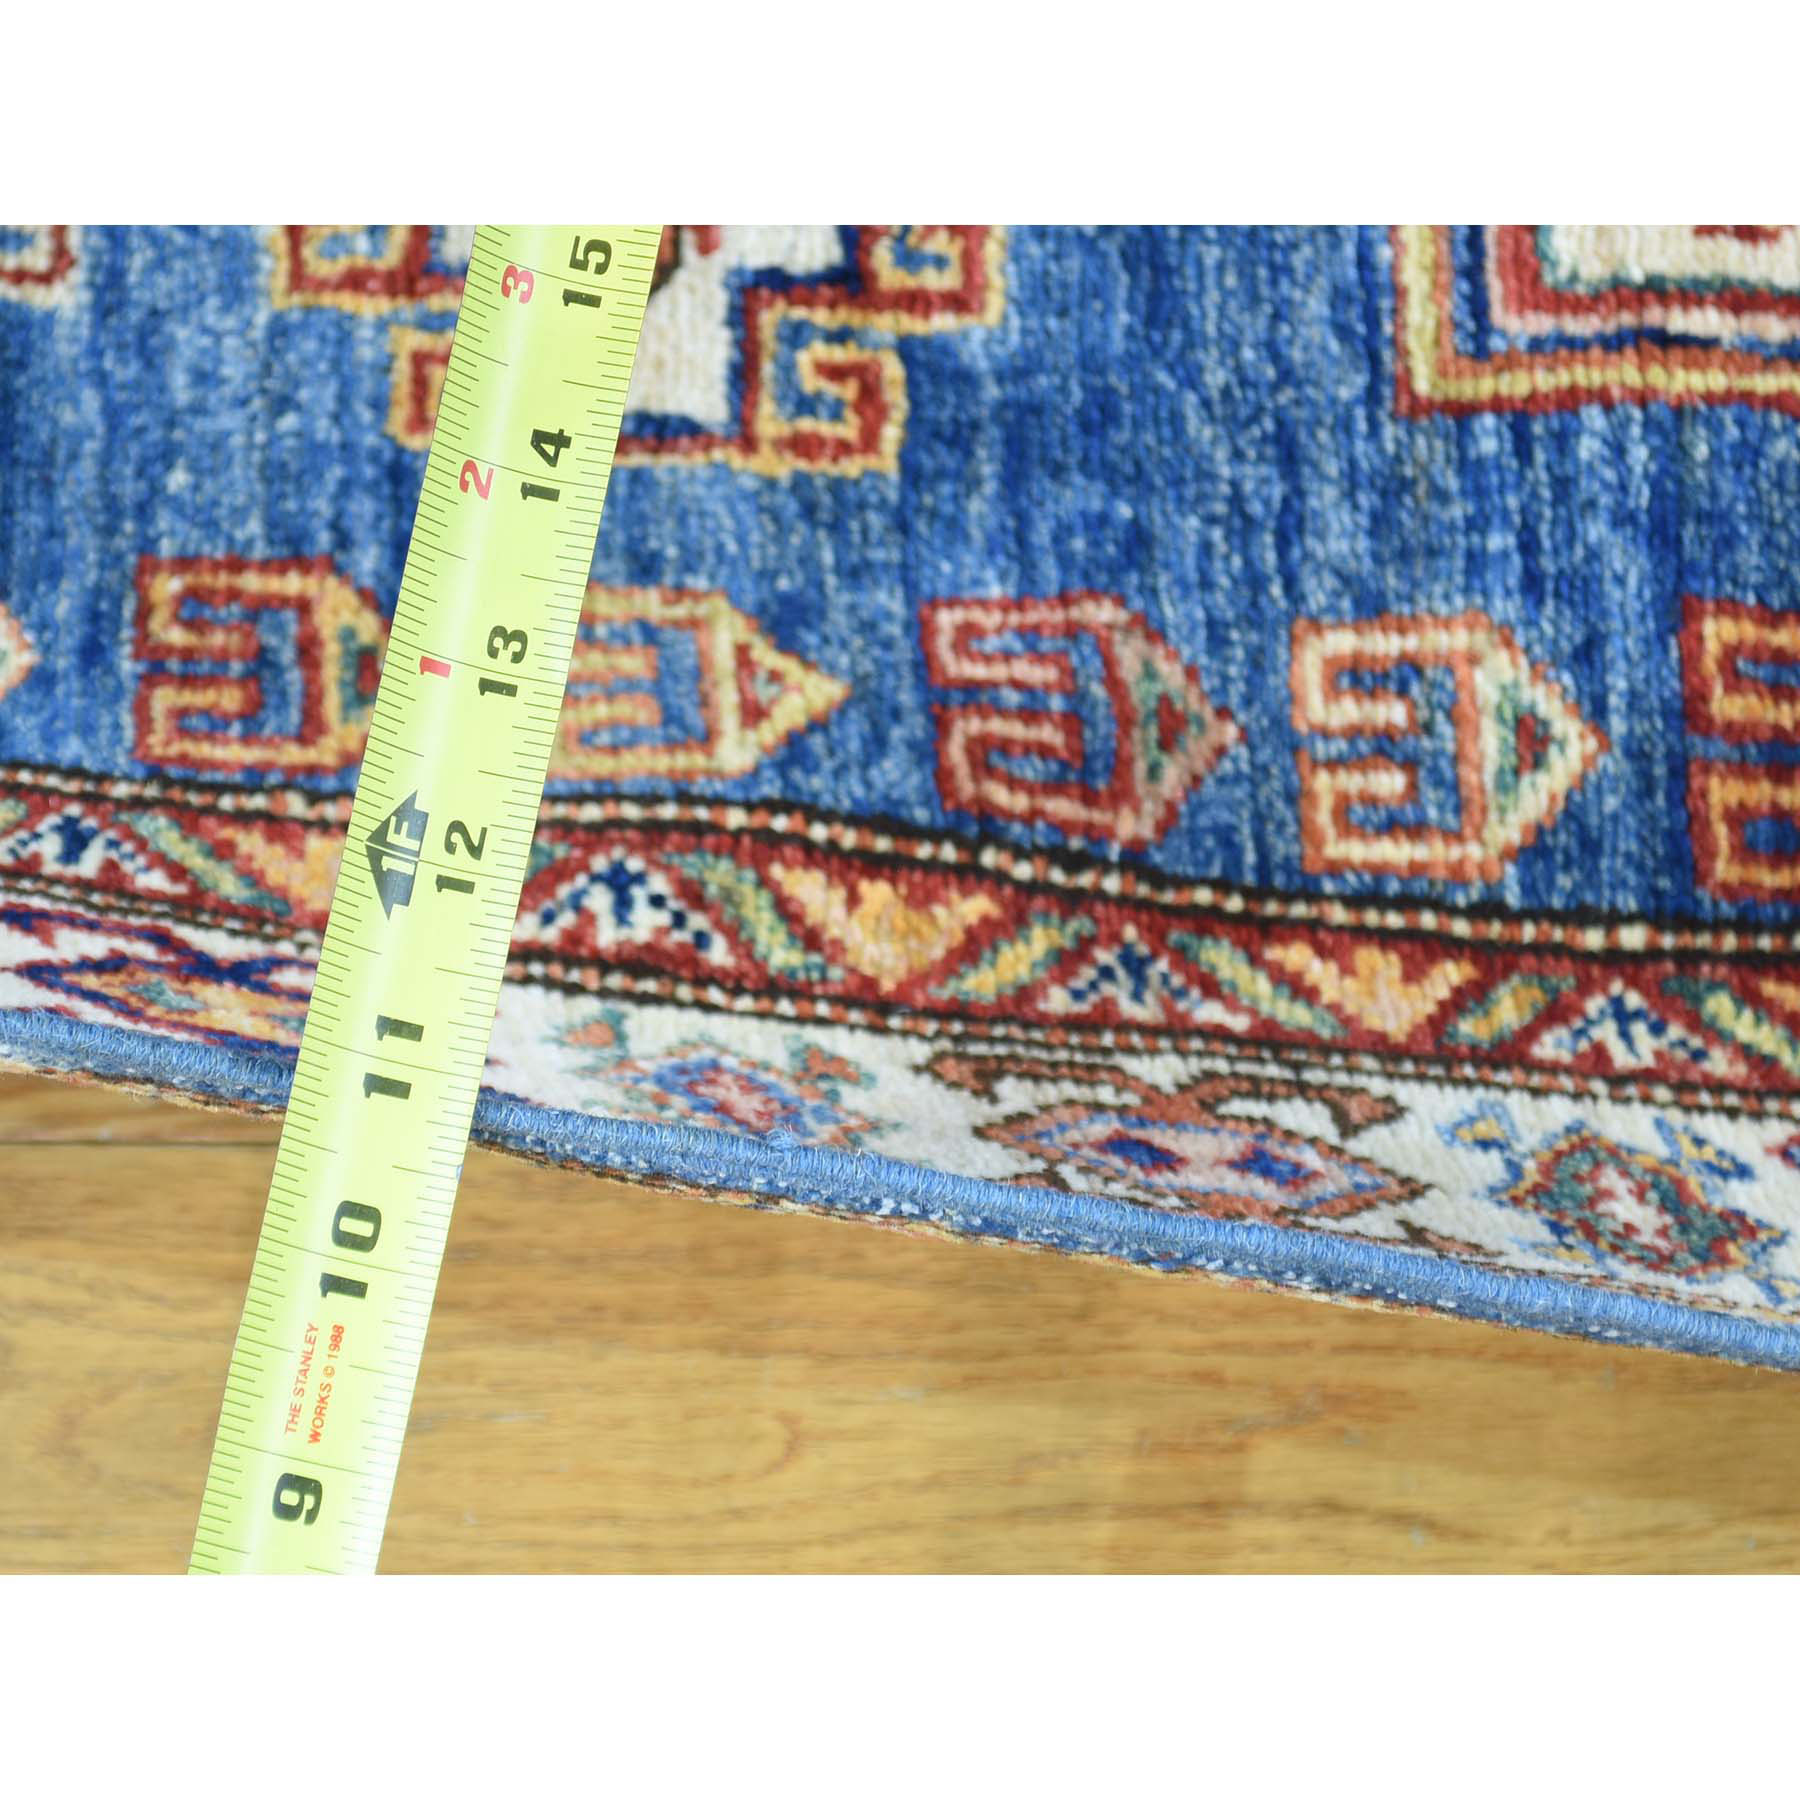 2-7 x4-5  Hand-Knotted Denim Blue Super Kazak Tribal Design Oriental Rug 